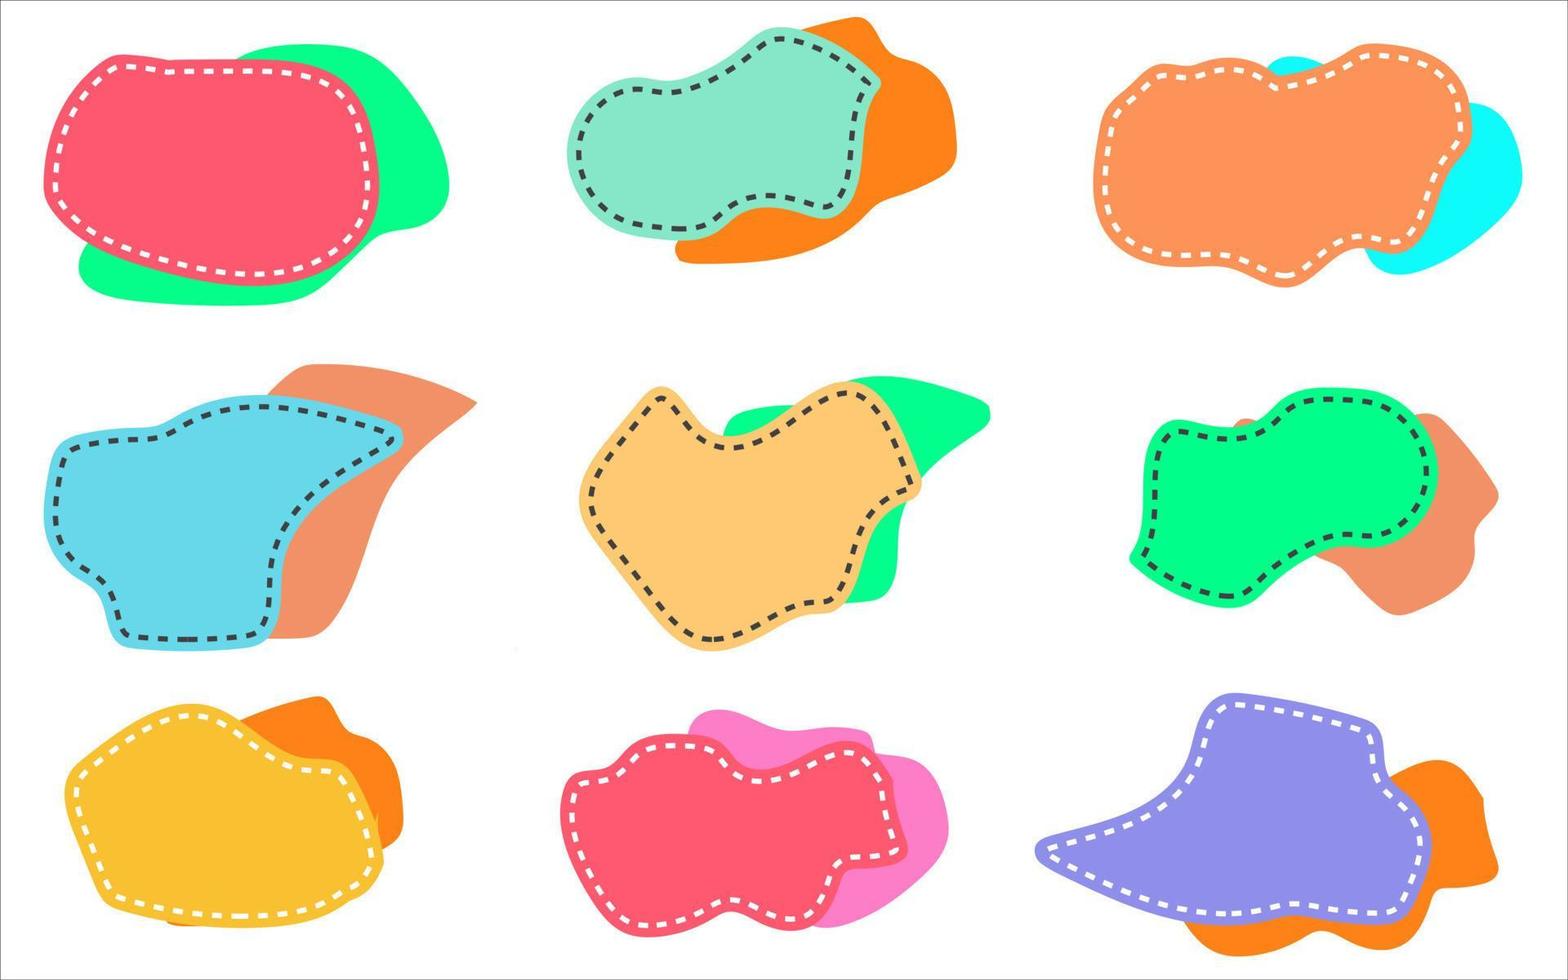 Abstrack shape illustration vector